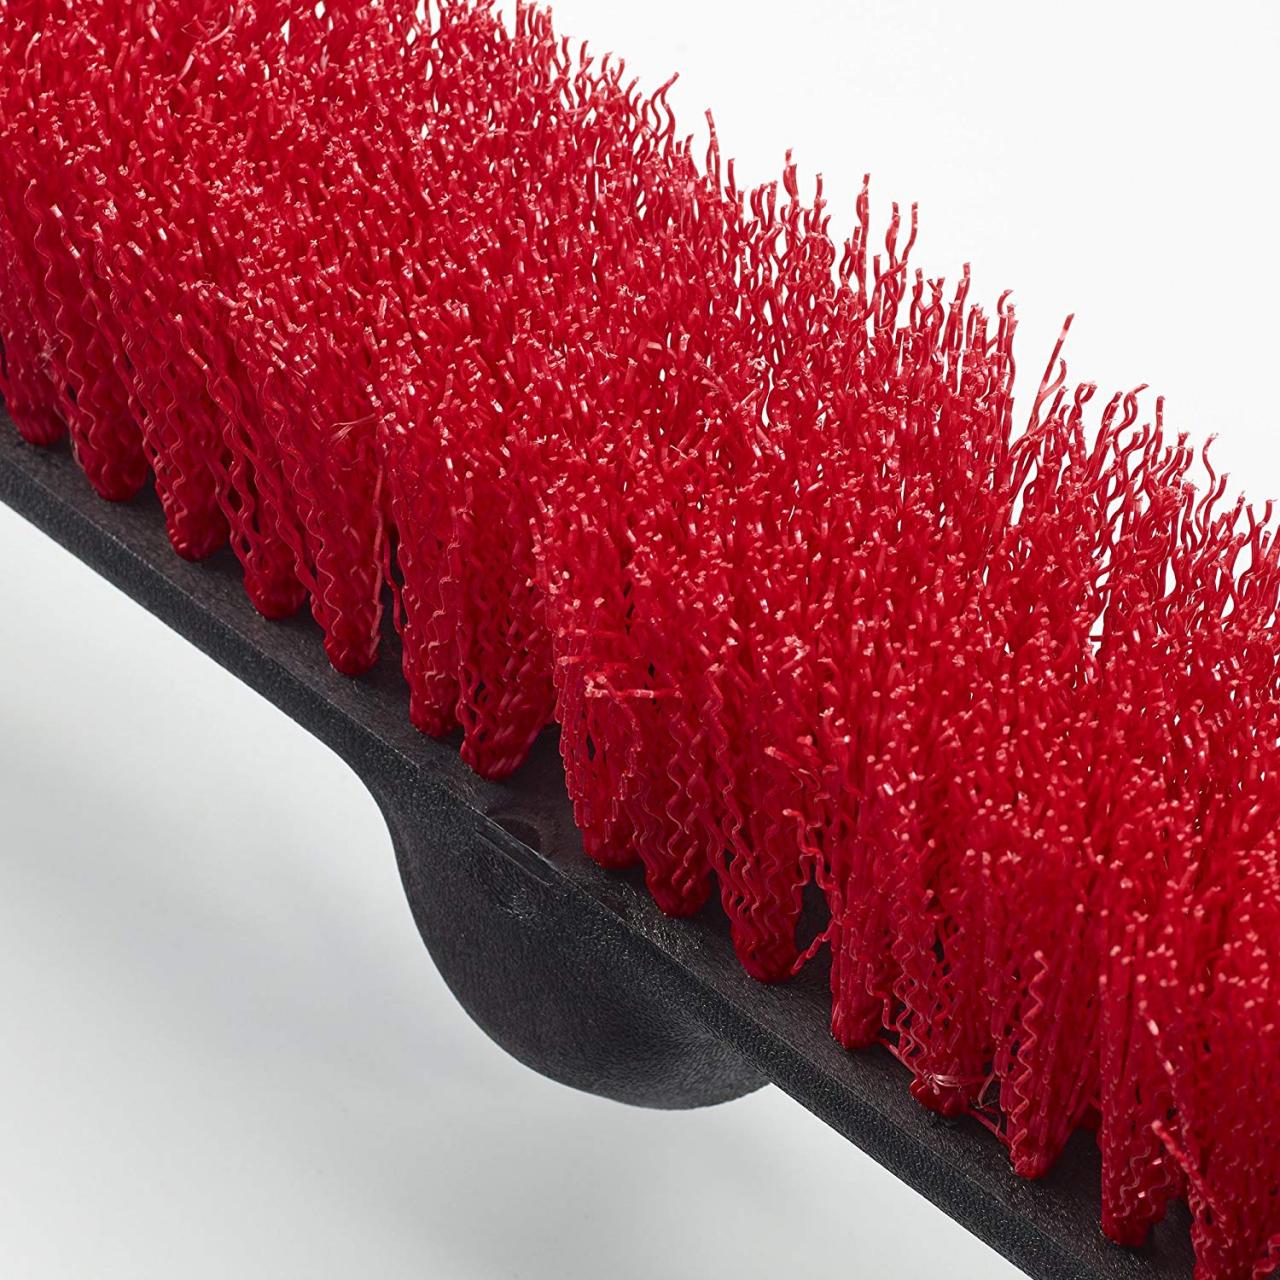 The 7 Best Push Brooms